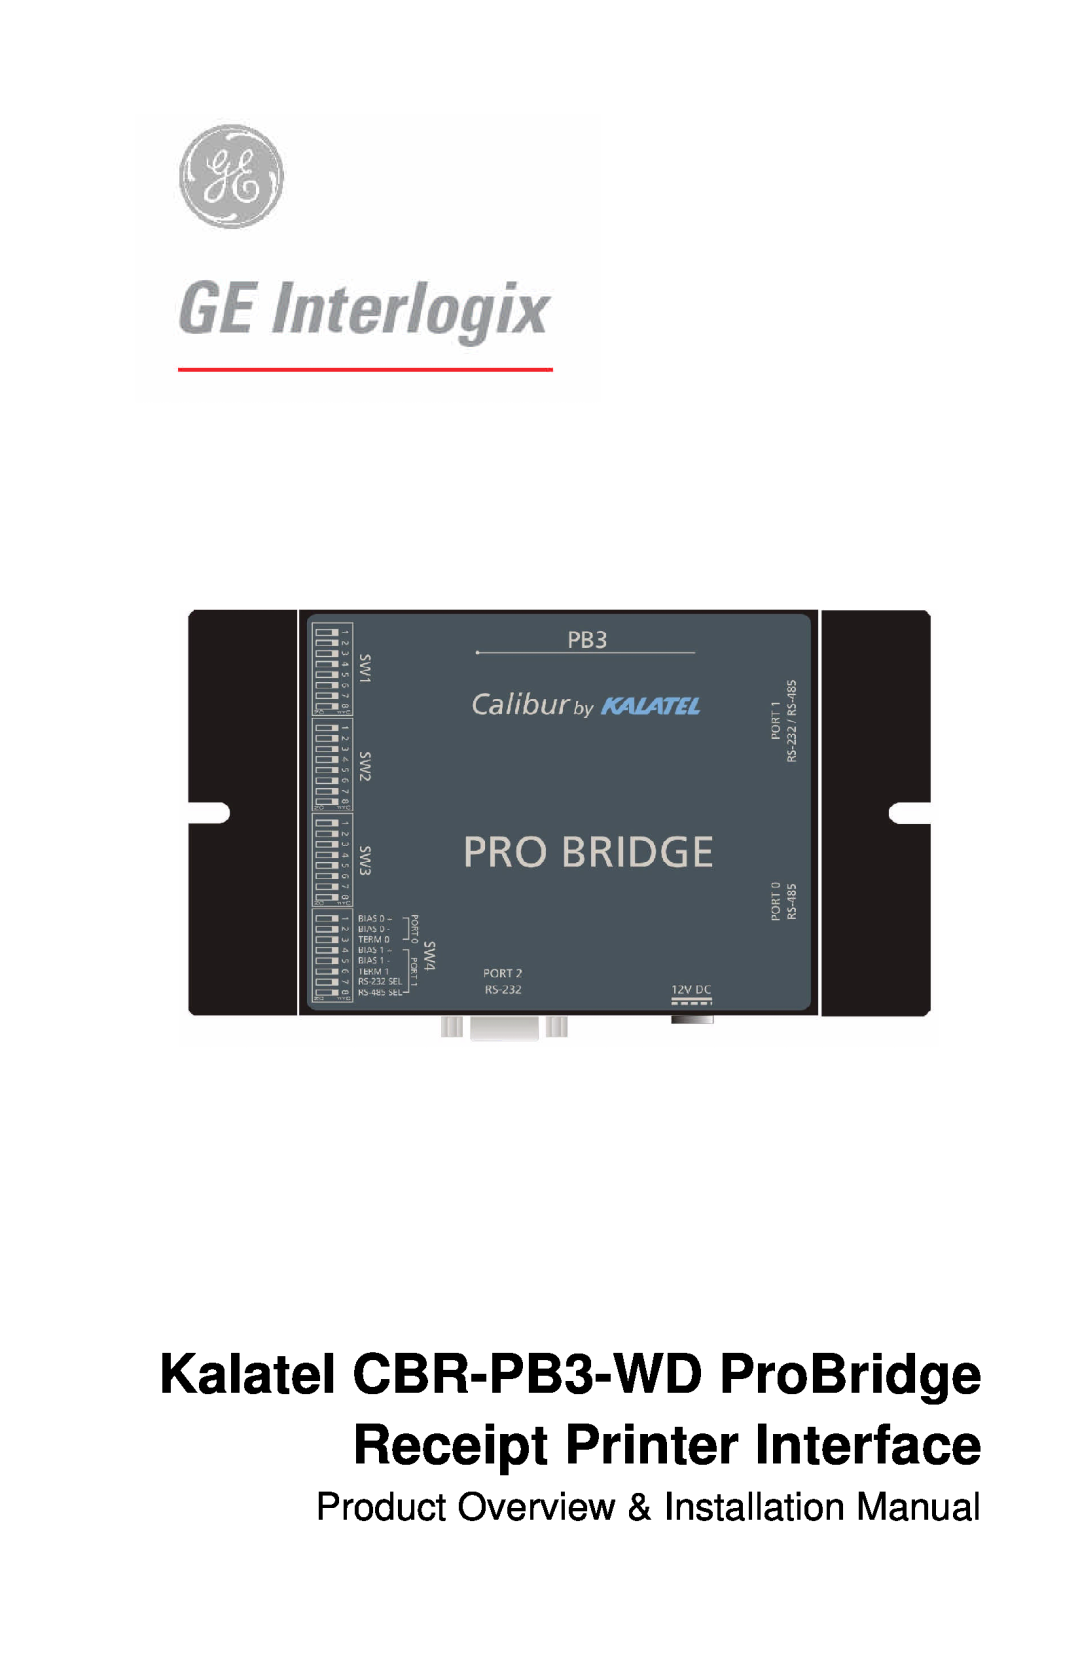 GE installation manual Kalatel CBR-PB3-WD ProBridge Receipt Printer Interface, Product Overview & Installation Manual 